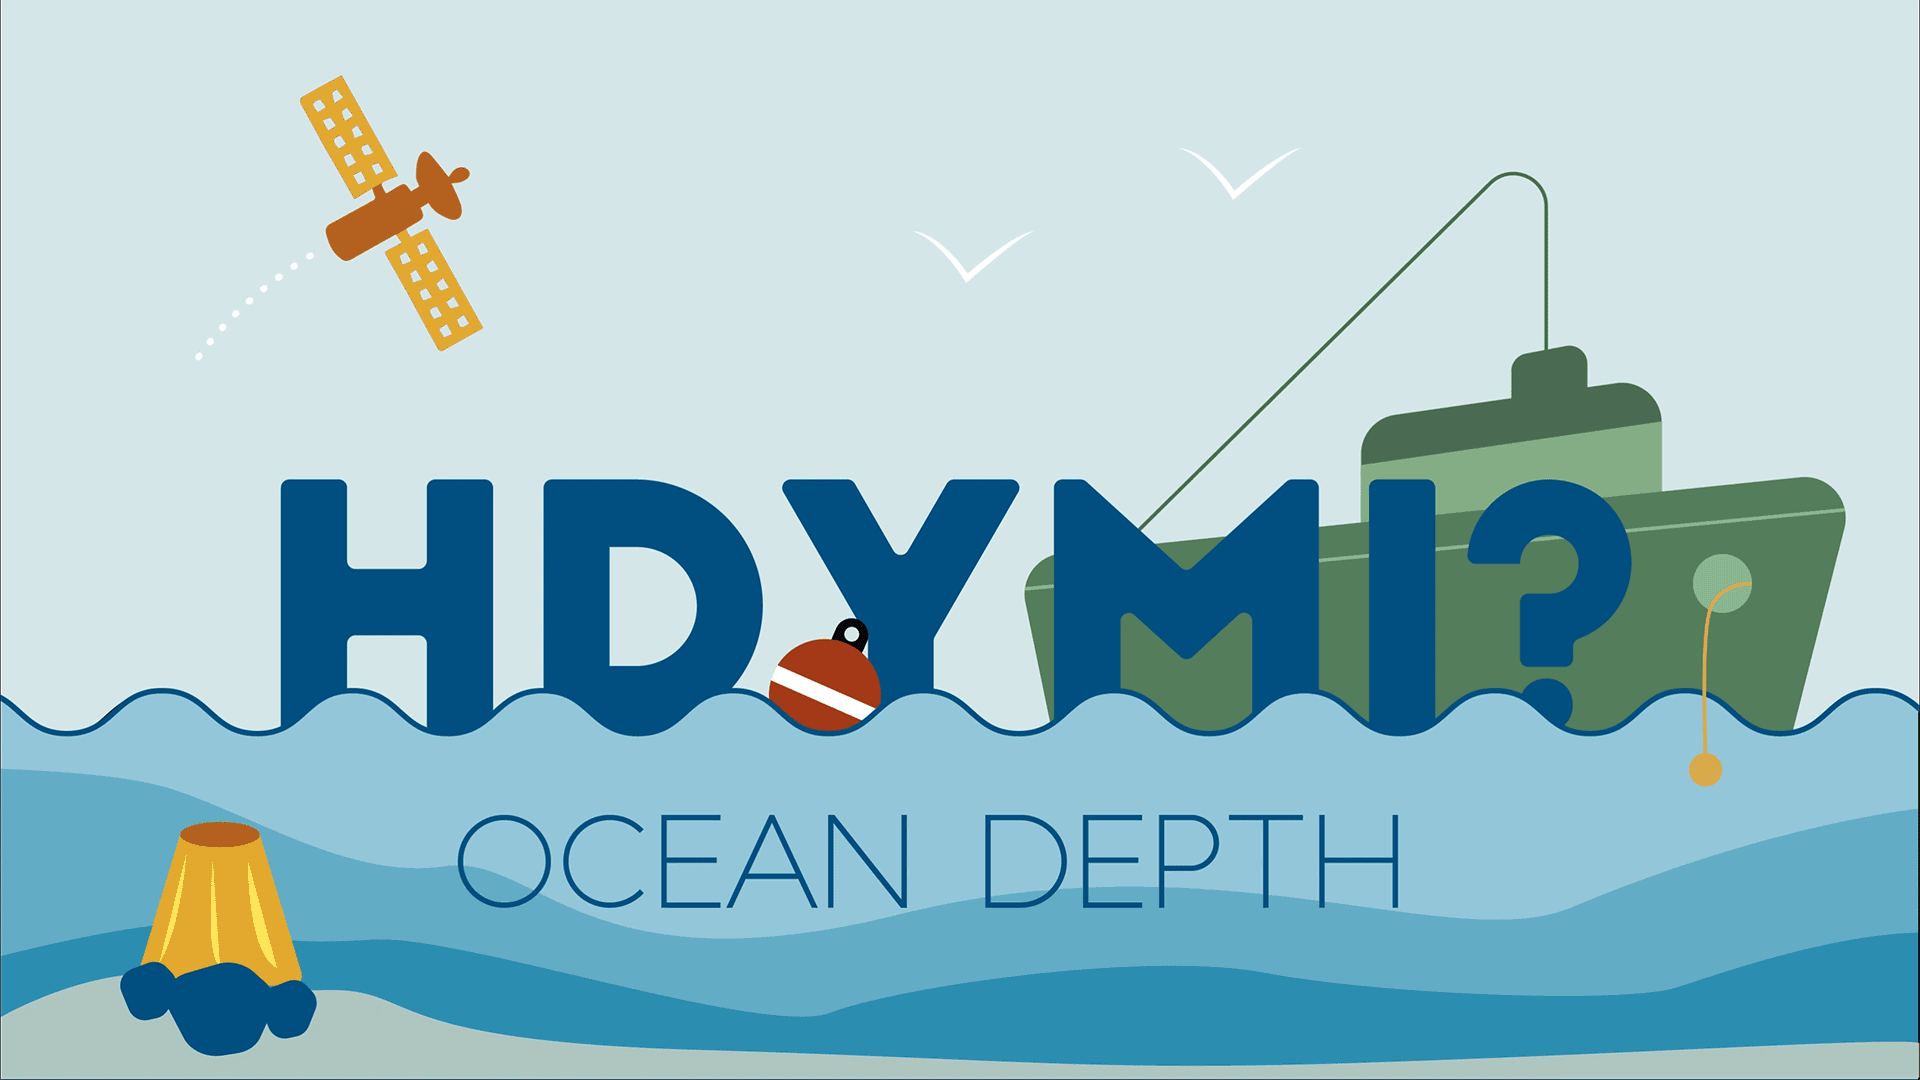 Animated illustration says "HDYMI? Ocean Depth" with swimming shark, bobbing ship, satellite.